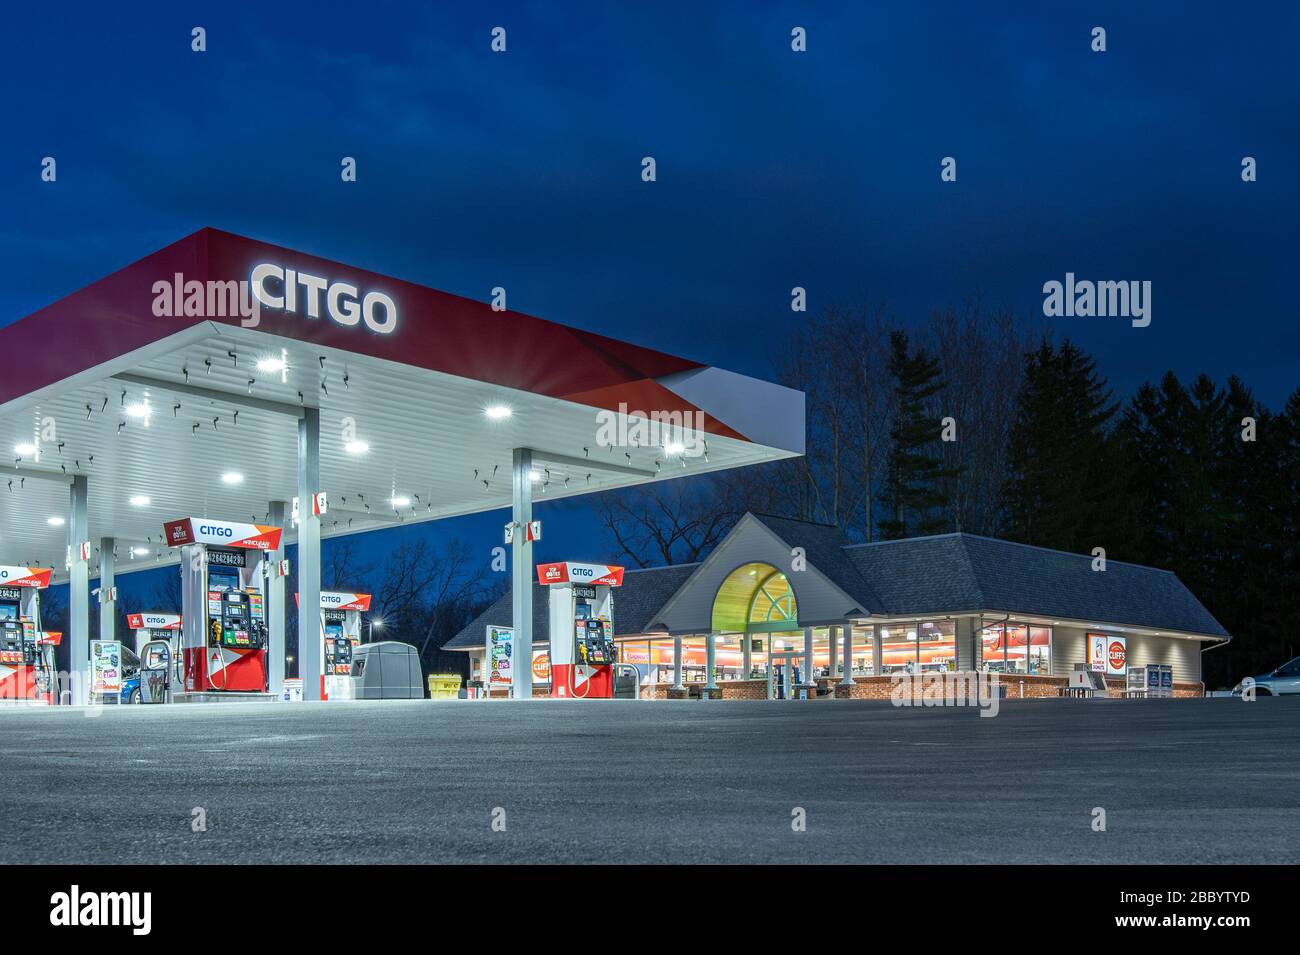 New Hartford, New York - Apr 1, 2020: Citgo Gas Station Exterior, Citgo Petroleum Corporation is a US-based Refiner, Transporter and Marketer of Trans Stock Photo